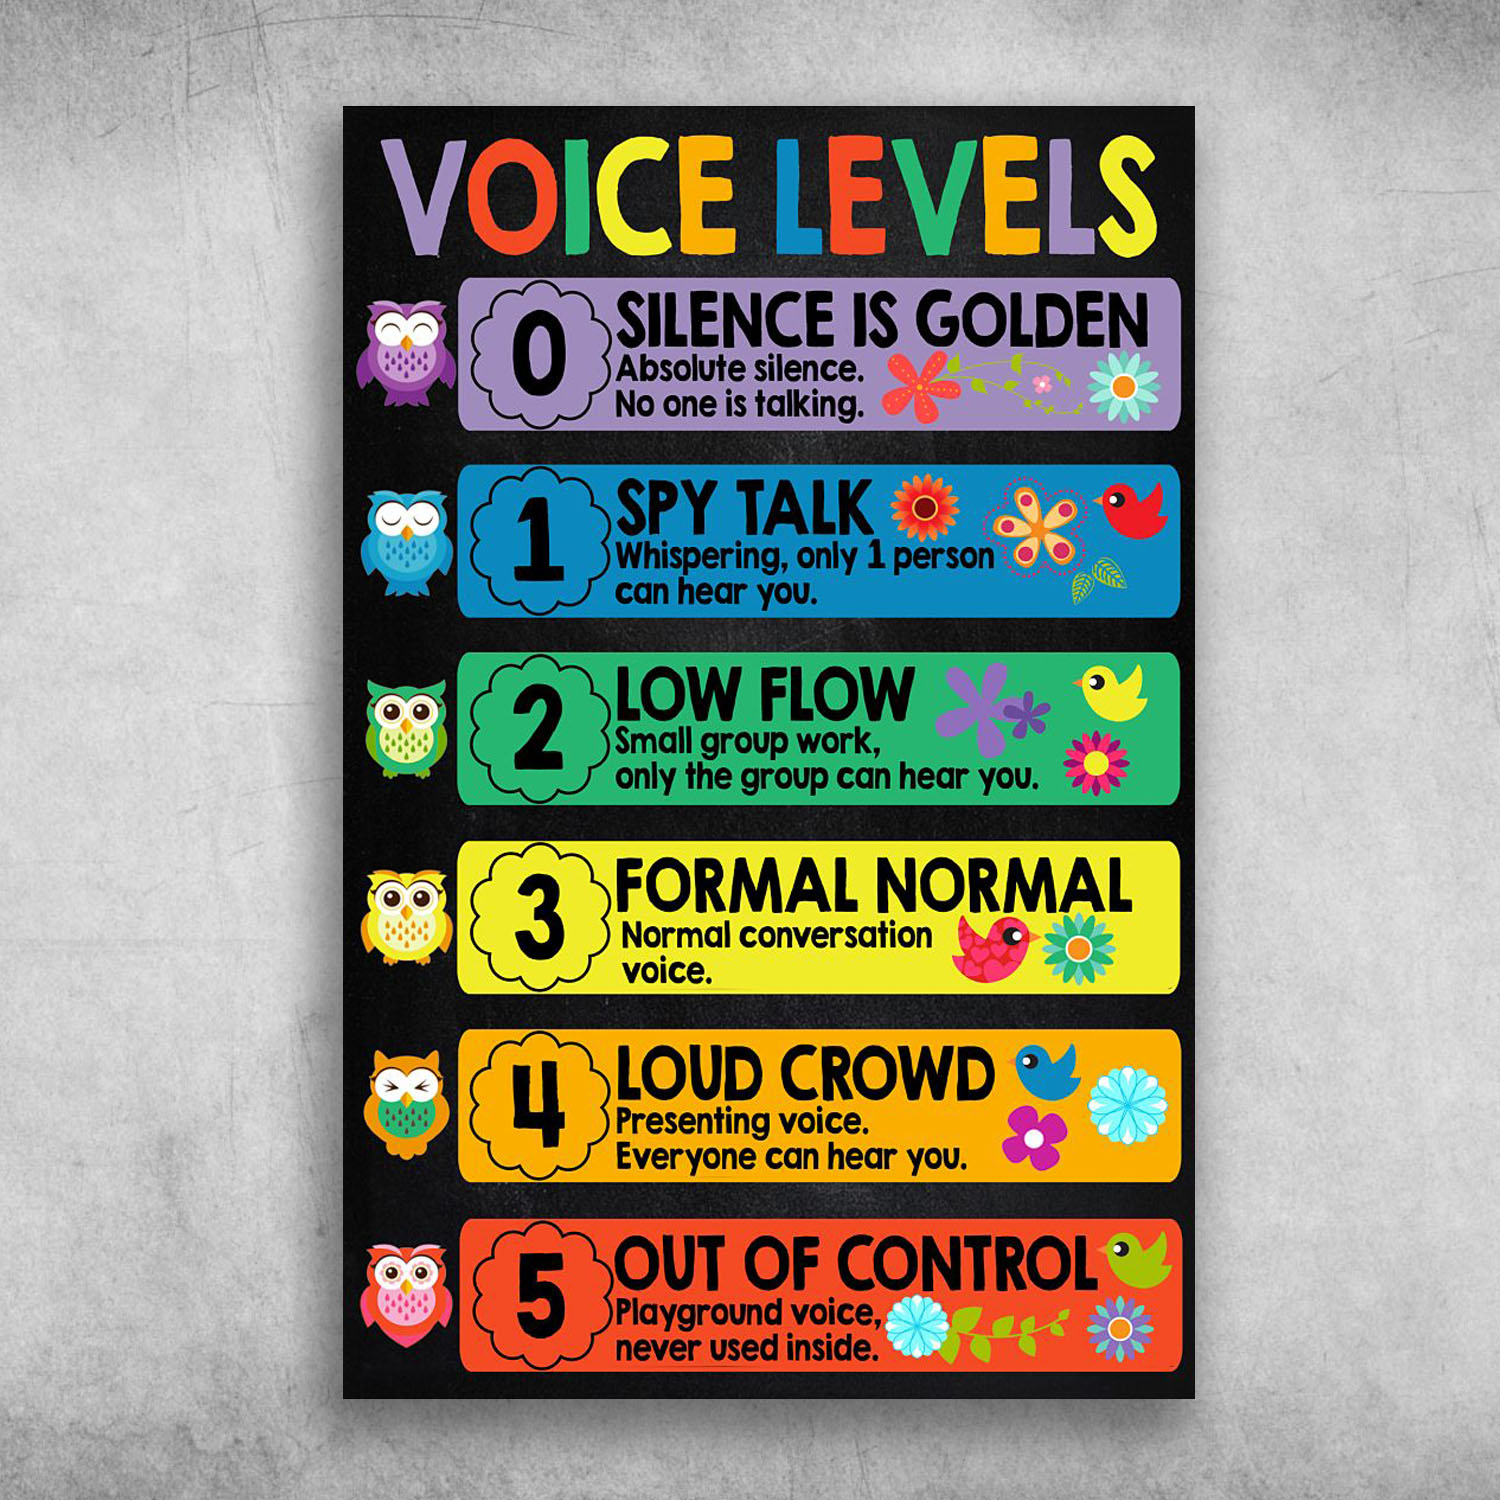 Voice Levels Silence Is Golden, Spy Talk, Low Flow